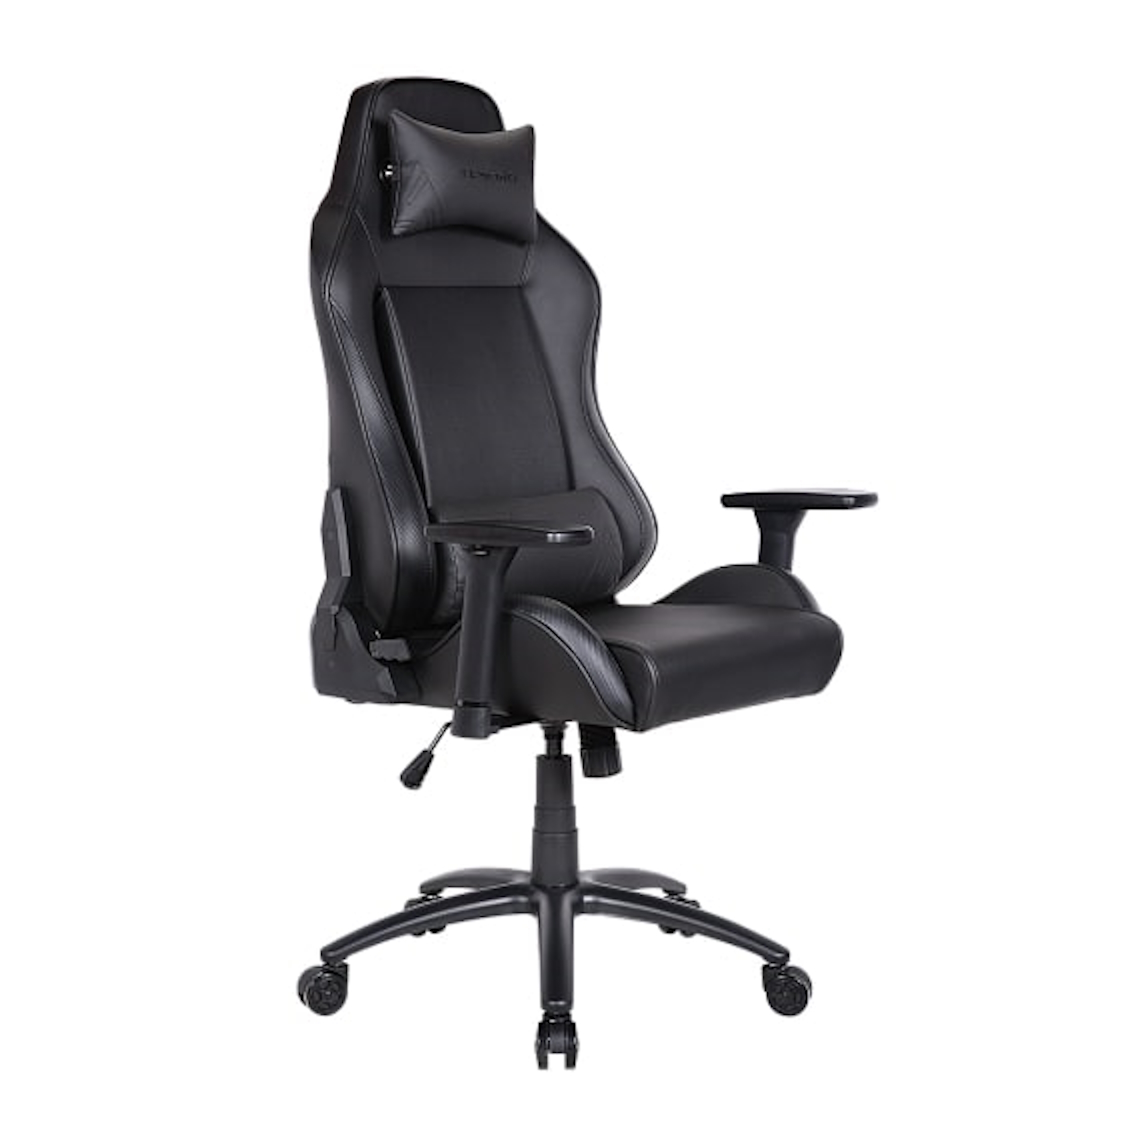 Игровые кресла Tesoro Alphaeon S1 TS-F715 Black игровые кресла gamelab warlock breeze gray